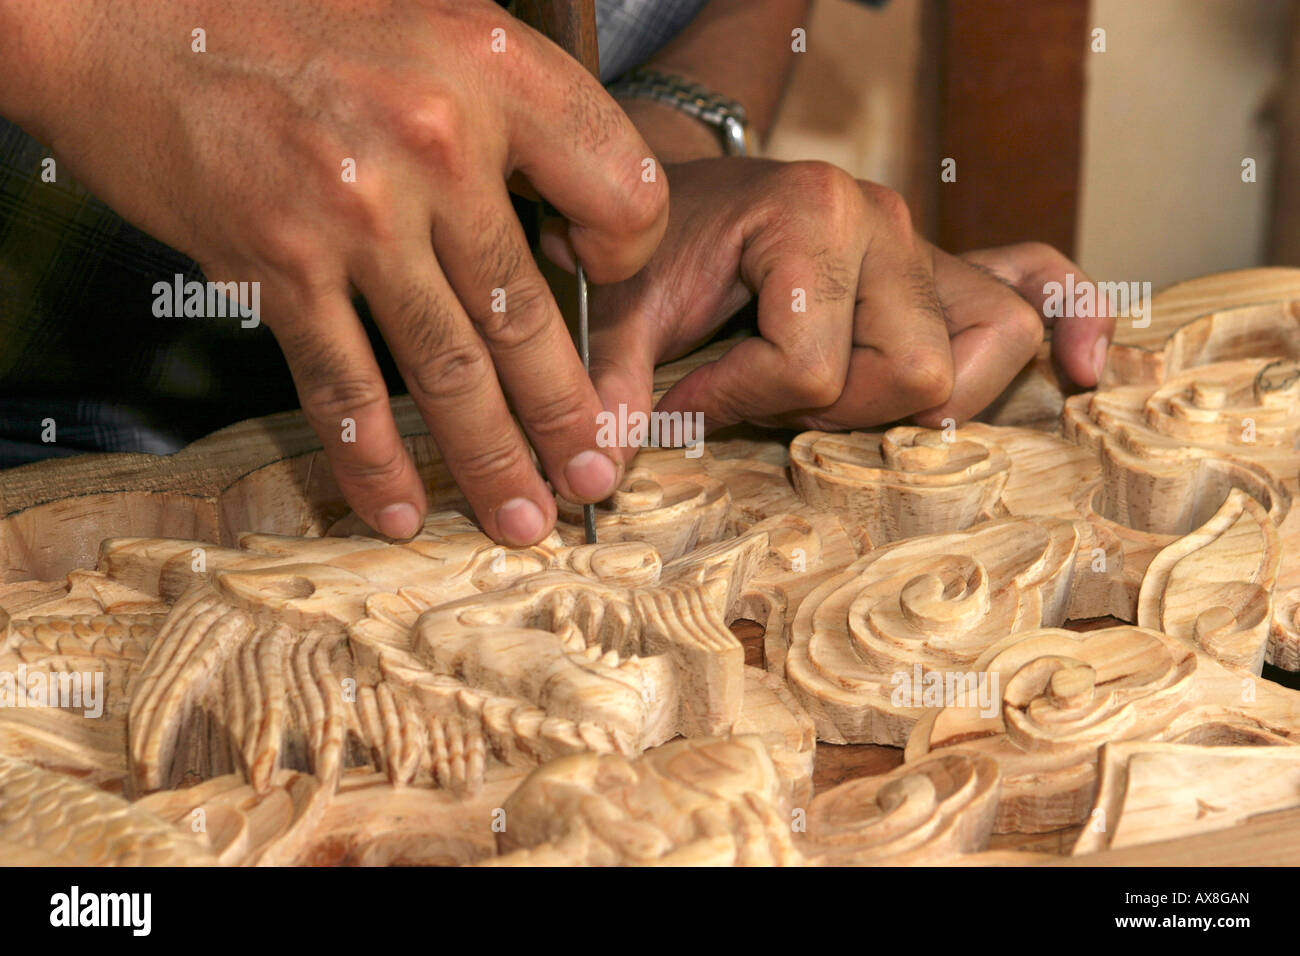 India Himachal Pradesh Norbulingka Institute Tibetan carving and carpentry school student carving dragons eye Stock Photo